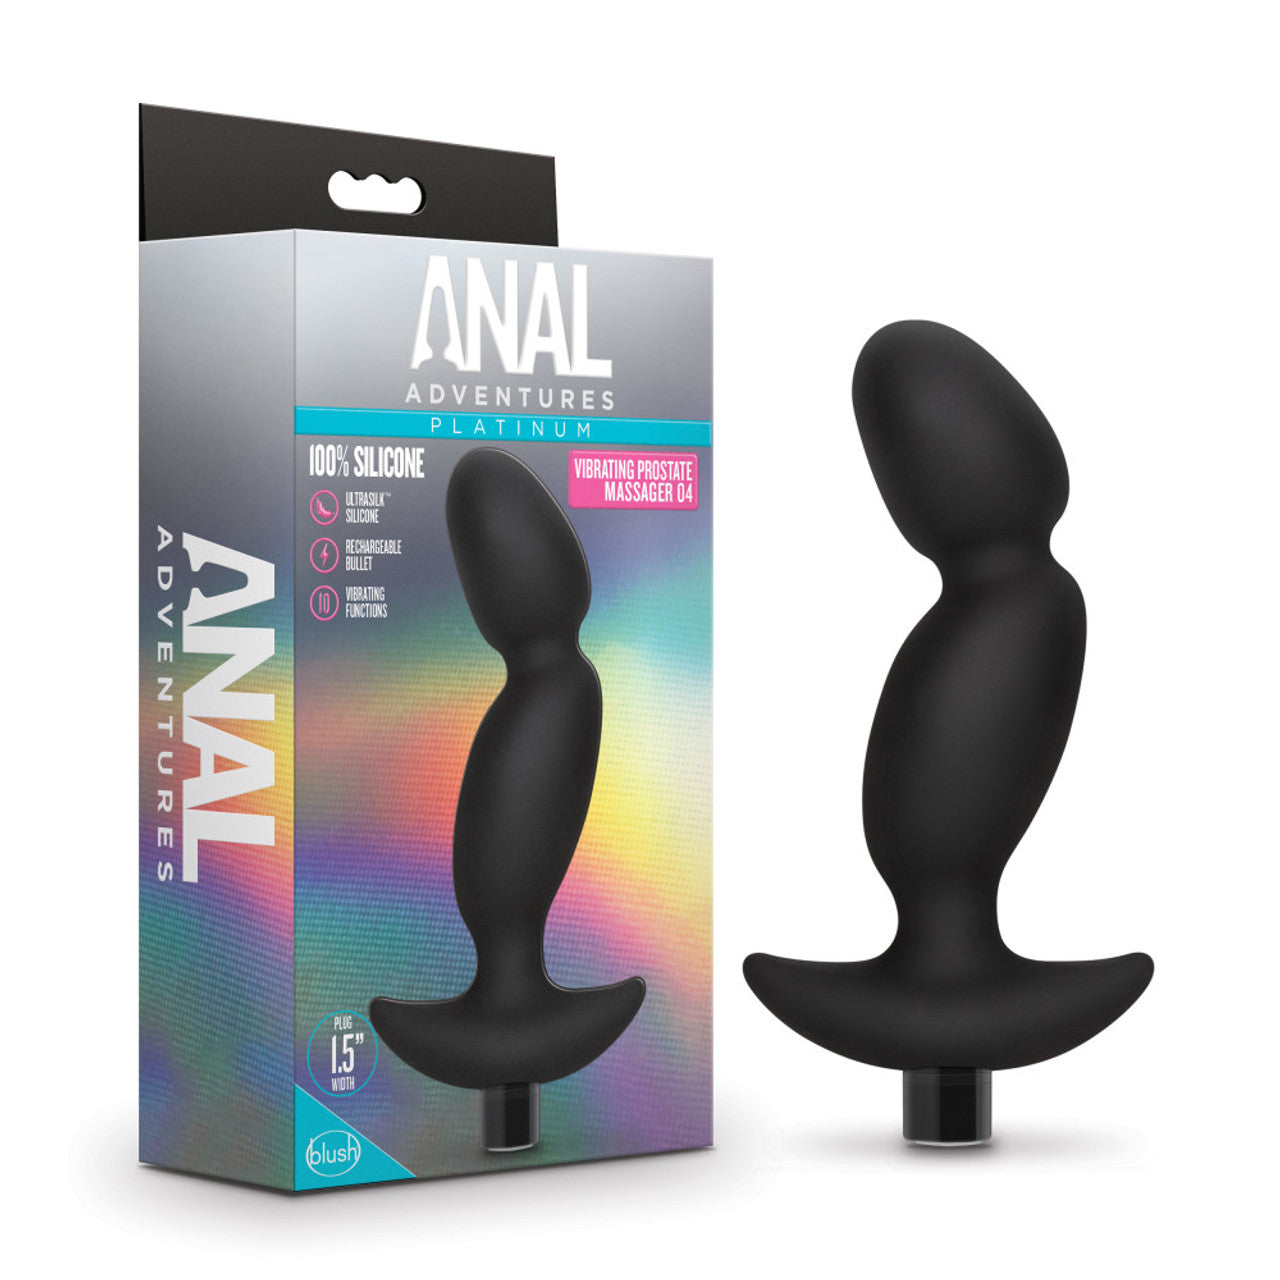 Anal Adventures Platinum - Silicone Vibrating Prostate Massager 04 - Black